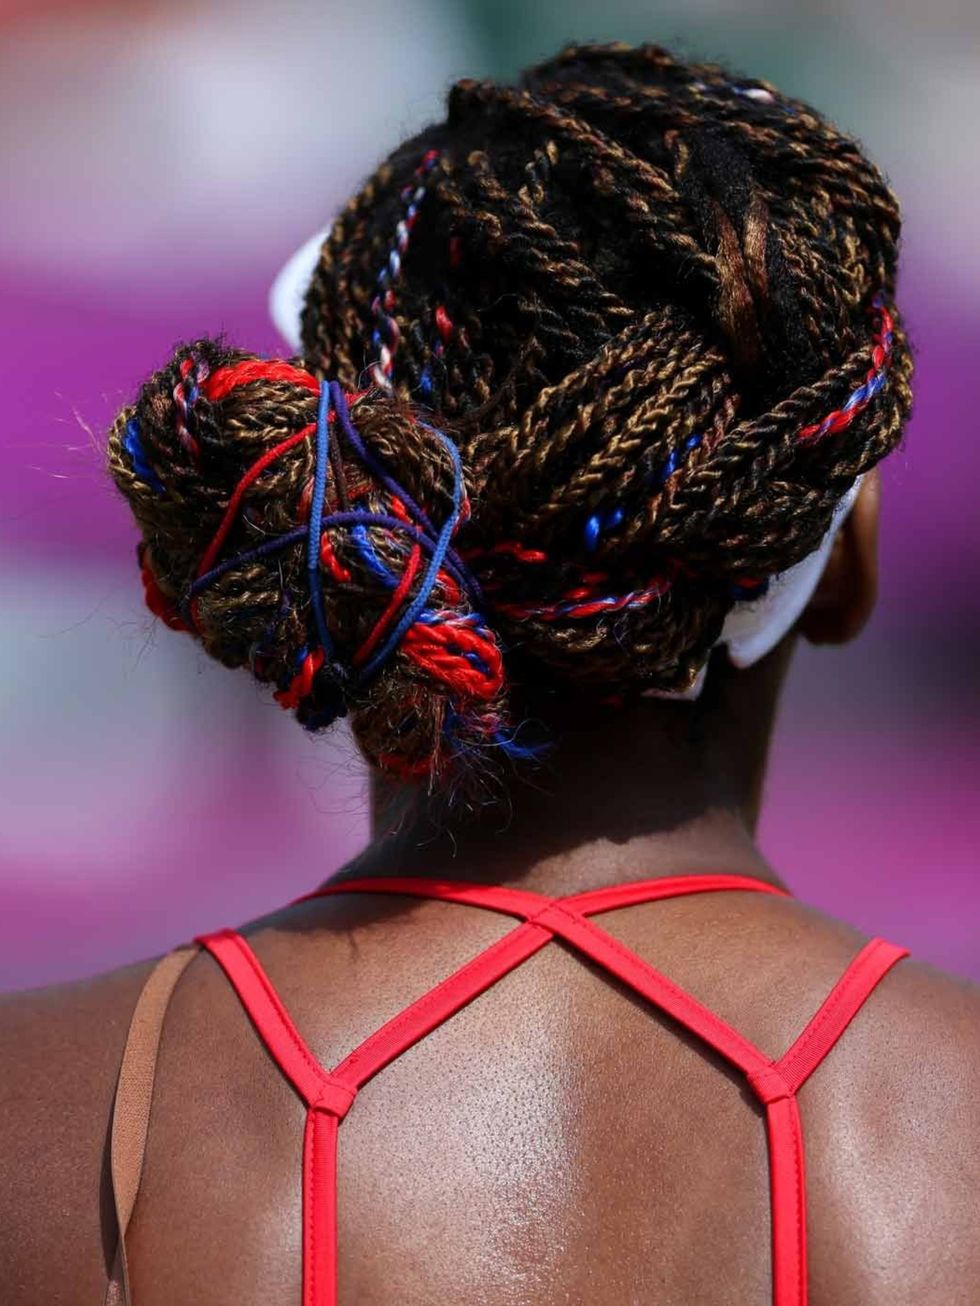 <p>Venus Williams, Tennis player from the USA, with patriotic braids</p>